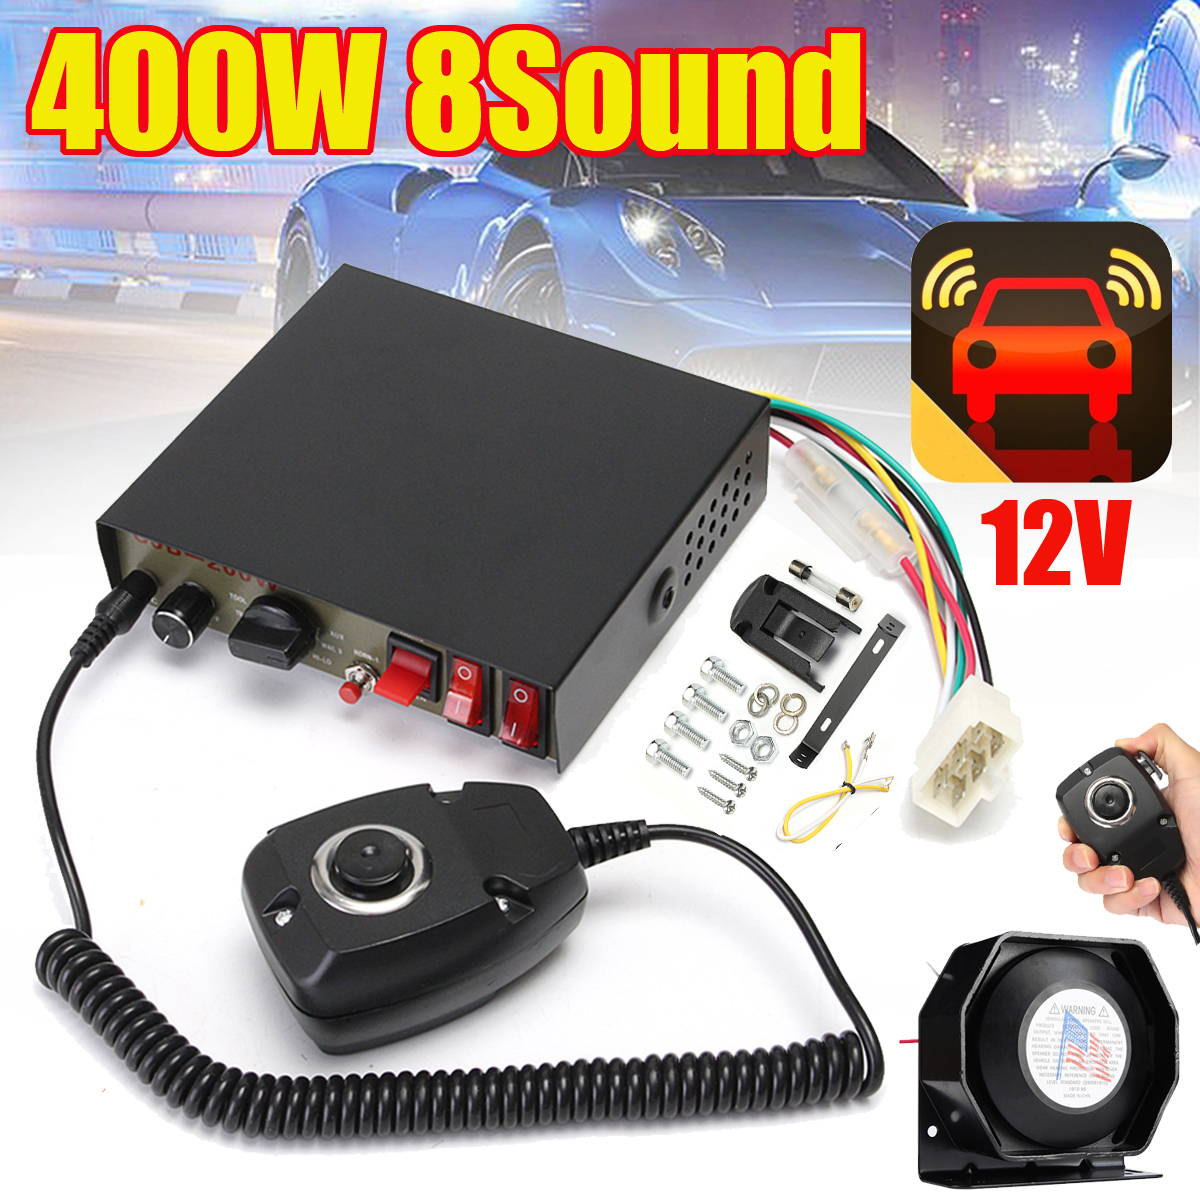 200W 8 Sound Loud Car Warning Alarm Police Fire Siren Horn PA Speaker MIC System 